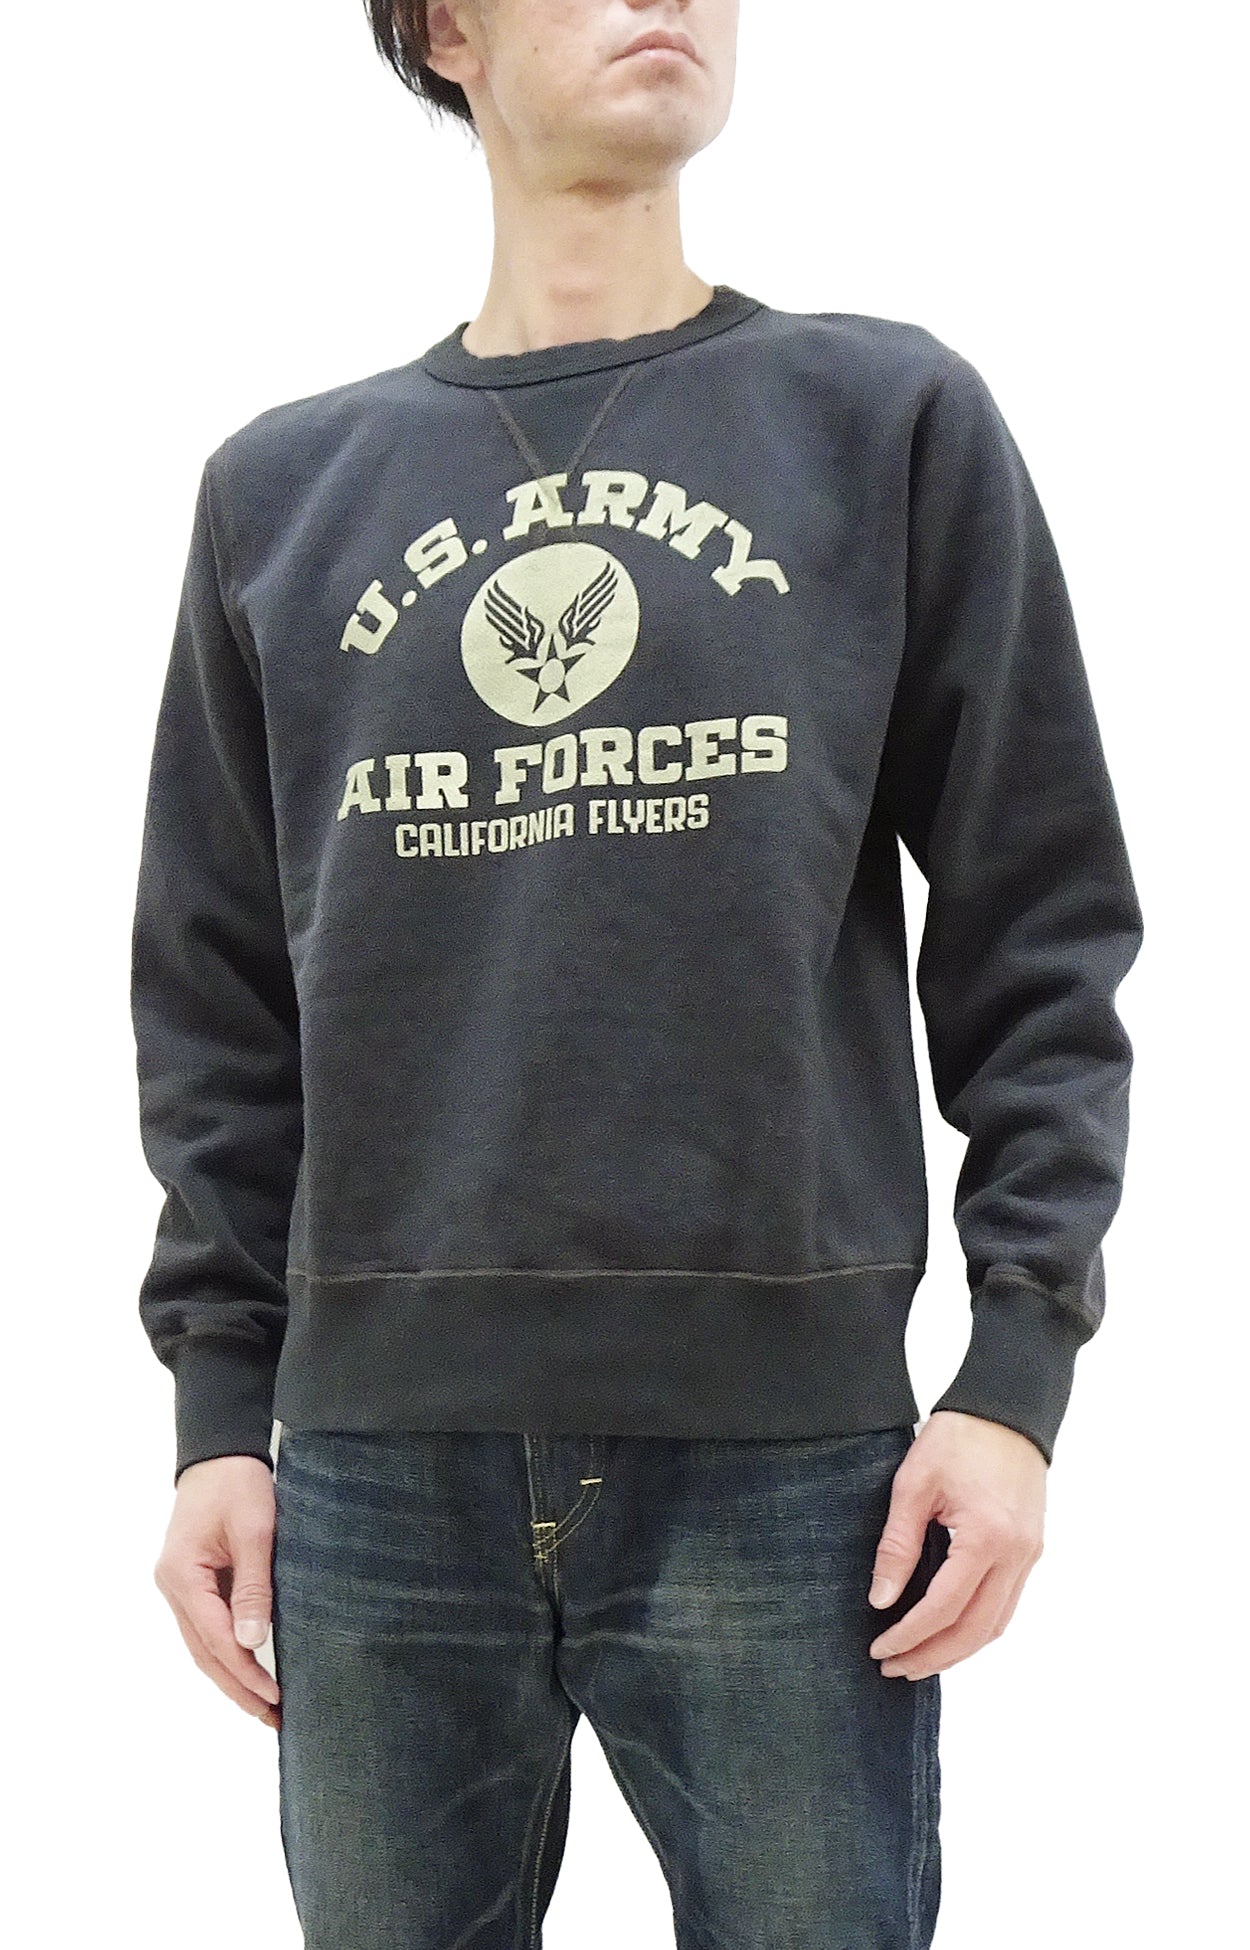 Buzz Rickson Sweatshirt Men's Us Army Air Force California Flyers 